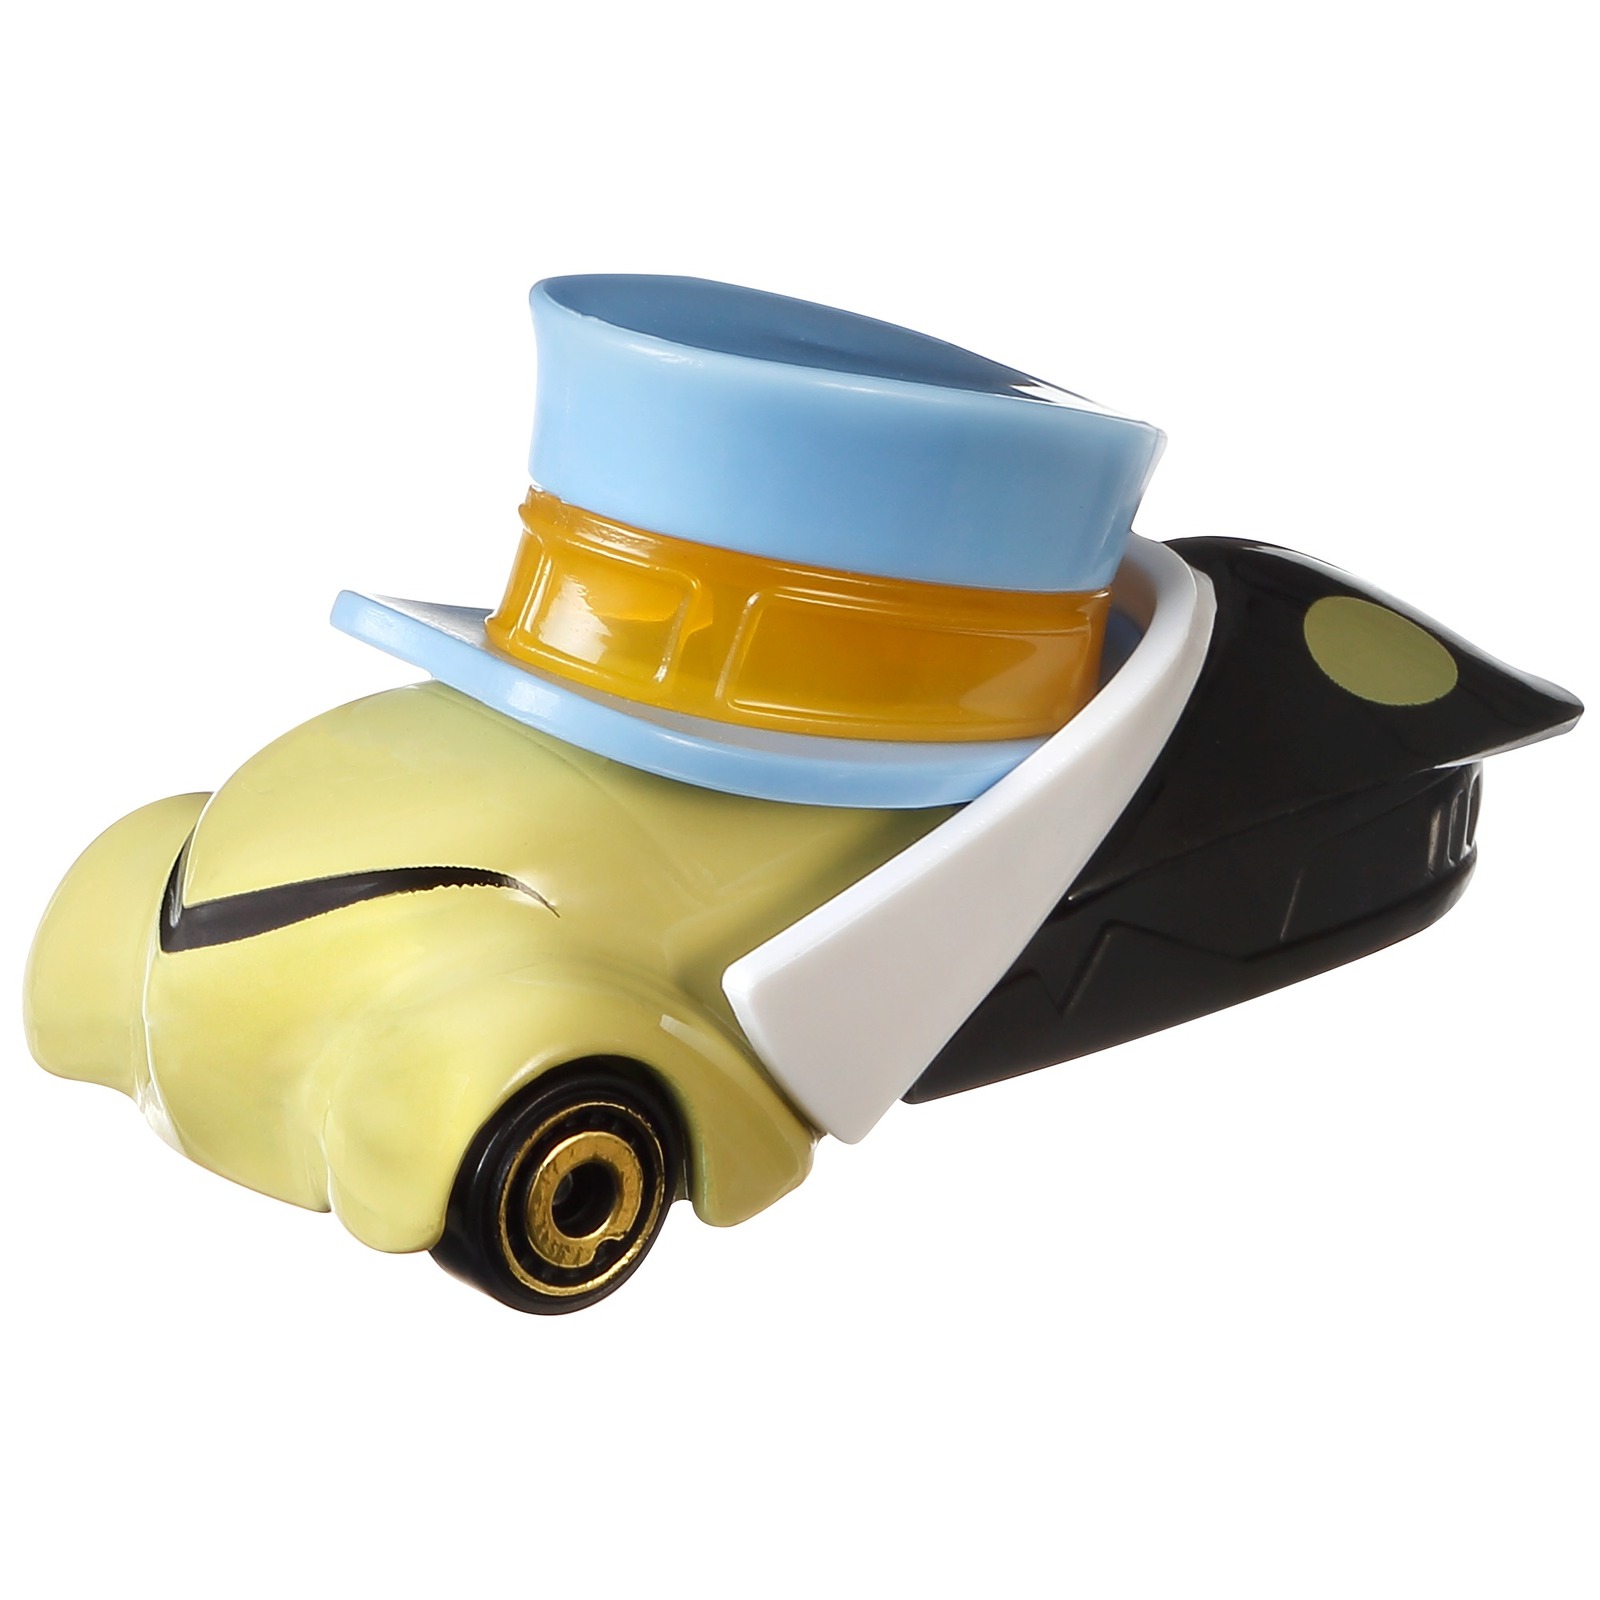 Hot Wheels Disney Jiminy Cricket Character Cars Series 6